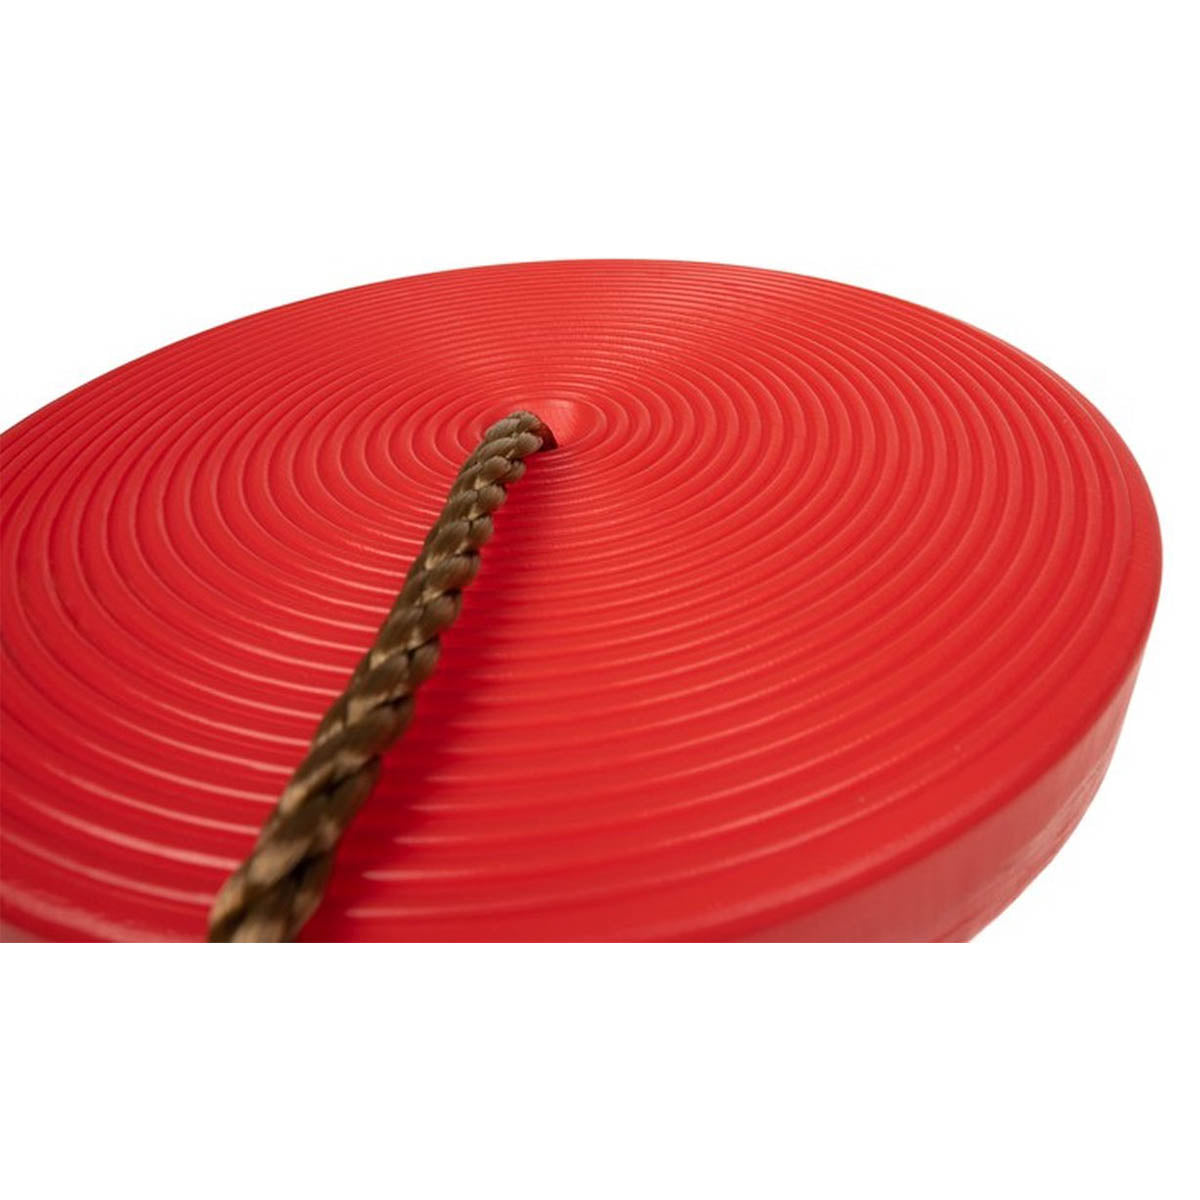 <tc>Ariko</tc> Garden swing for children - Round - Saucer swing - Plastic - Red